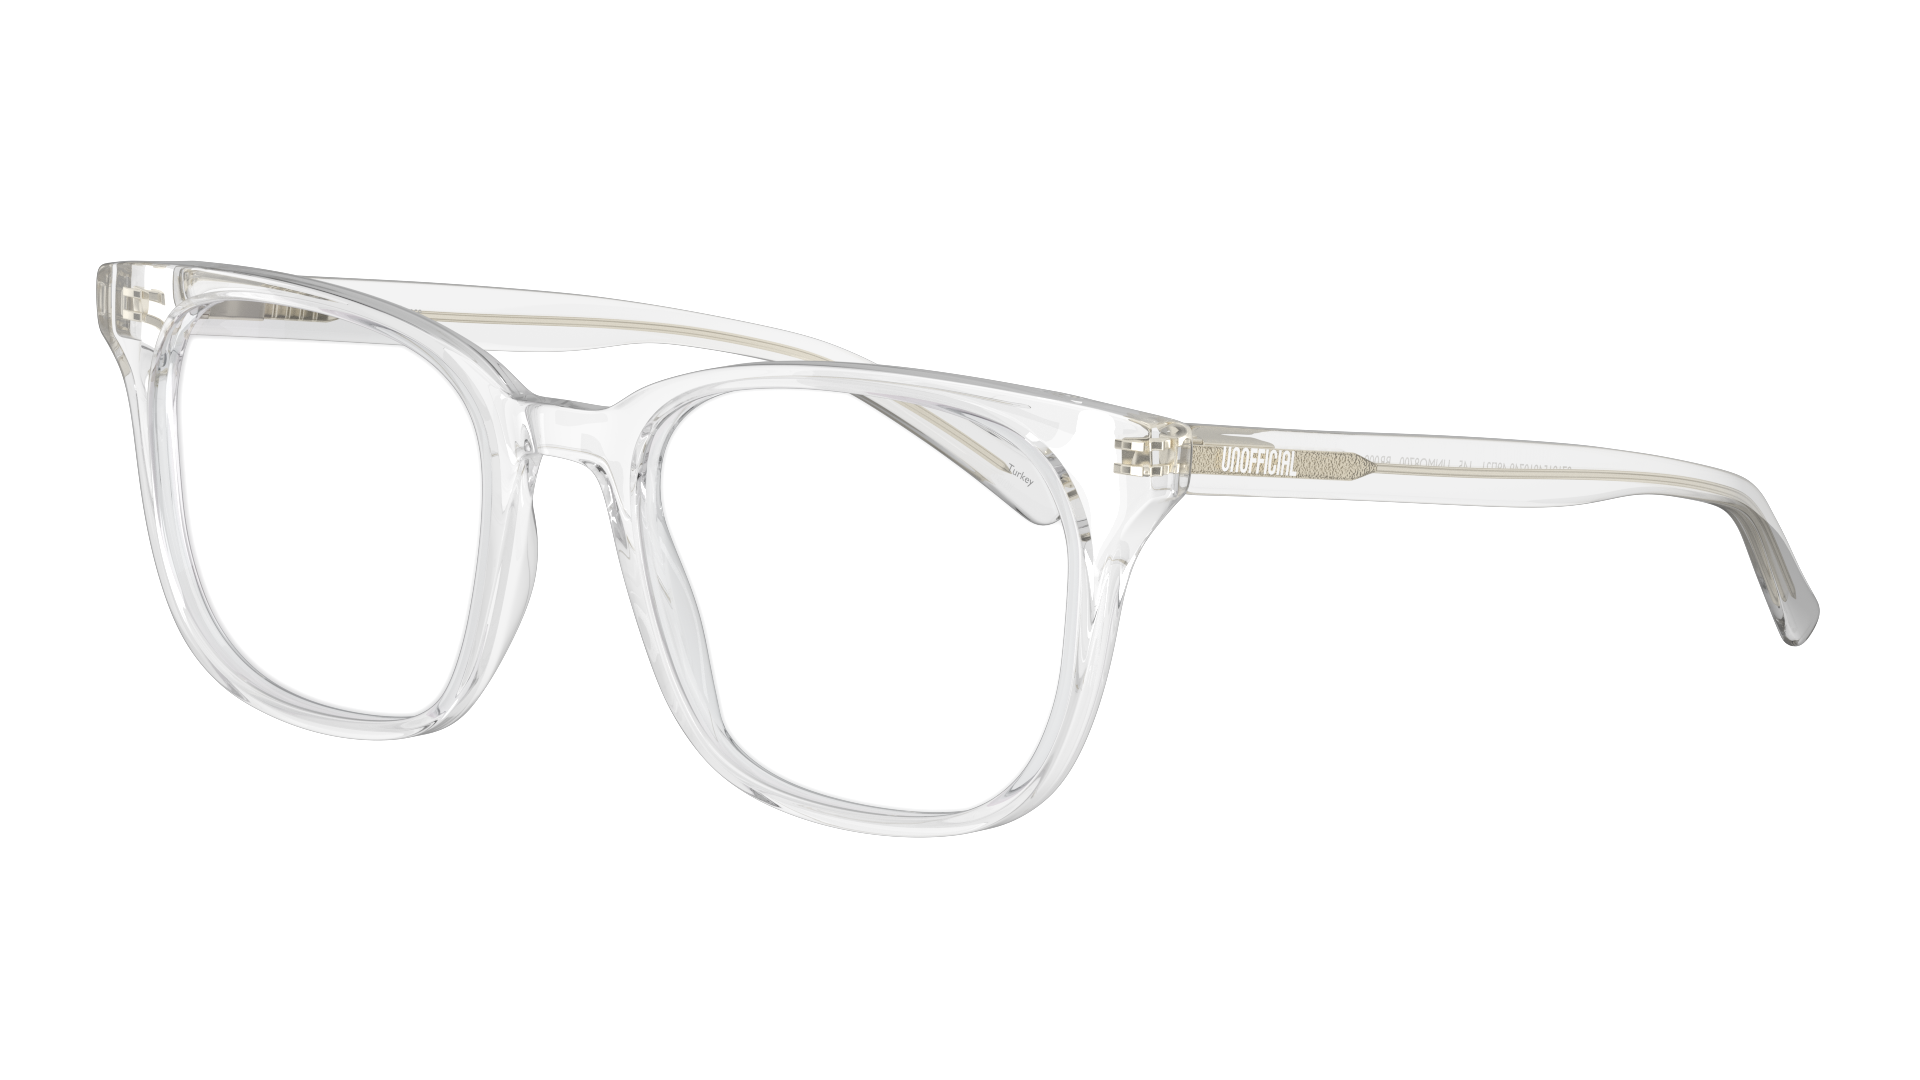 Angle_Left01 Unofficial UNOM0225 (TT00) Glasses Transparent / Transparent